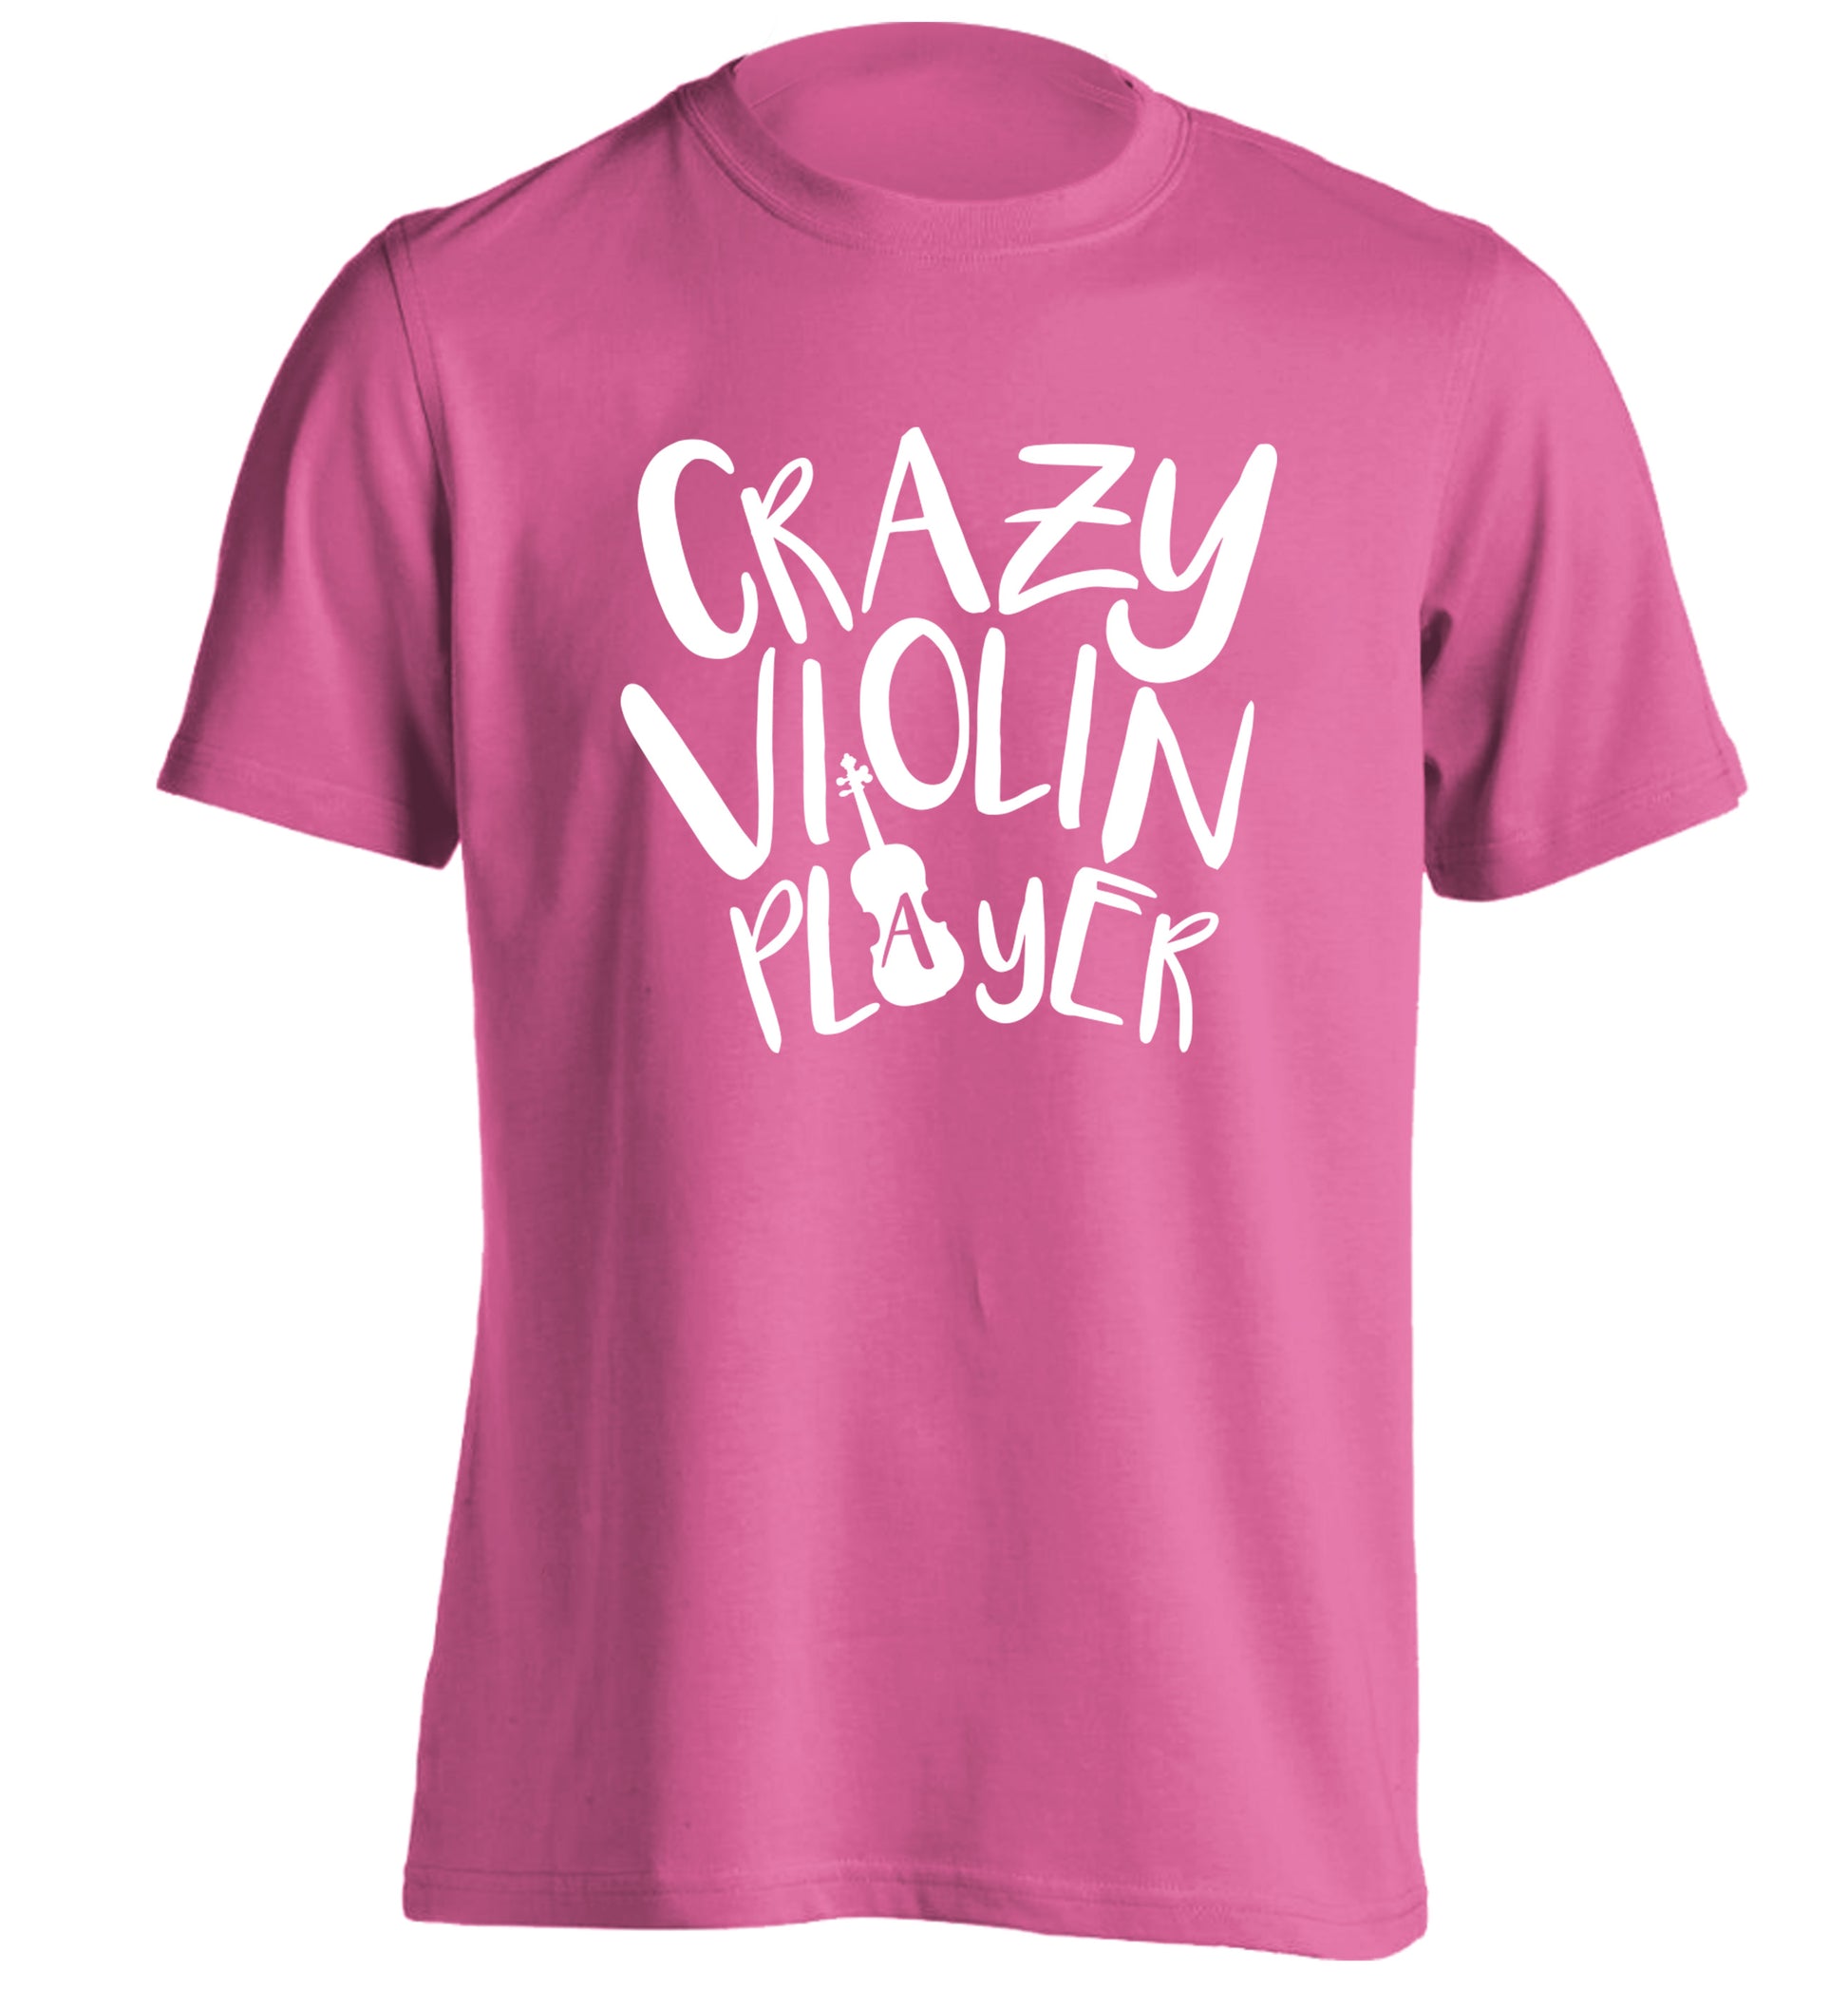 Crazy Violin Player adults unisex pink Tshirt 2XL